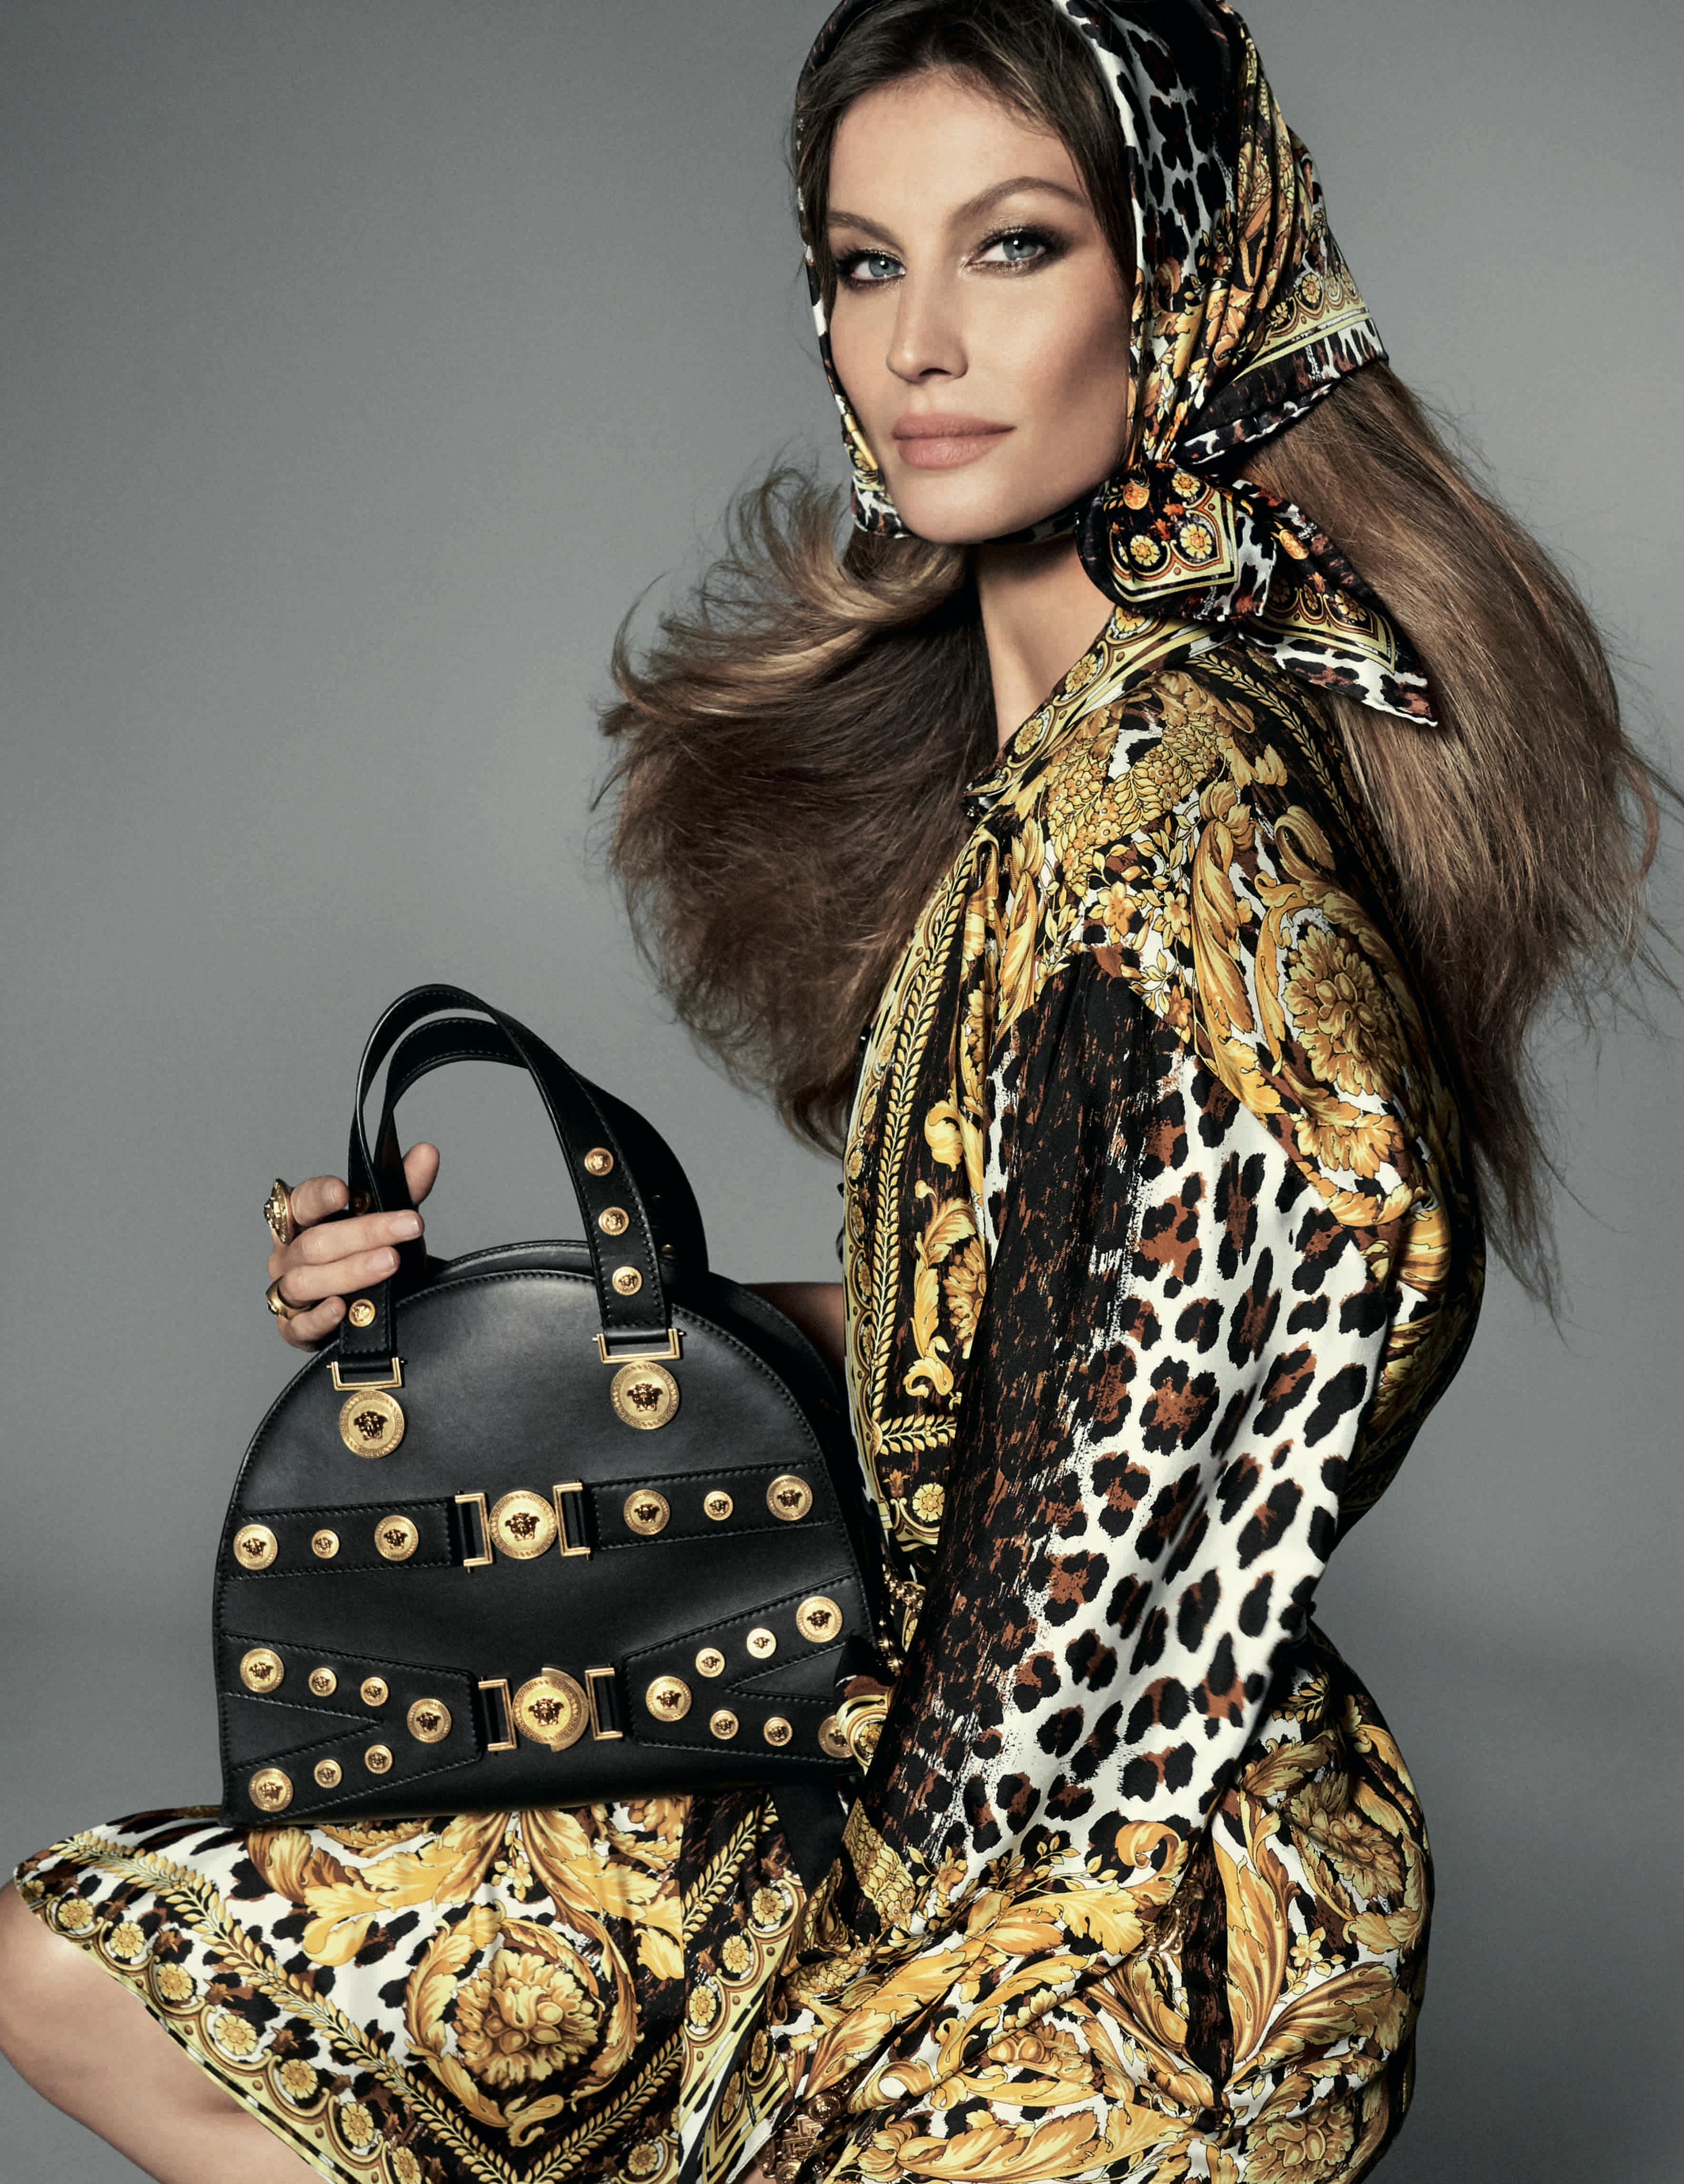 The new star of Donatella Versace's latest campaign is Donatella Versace